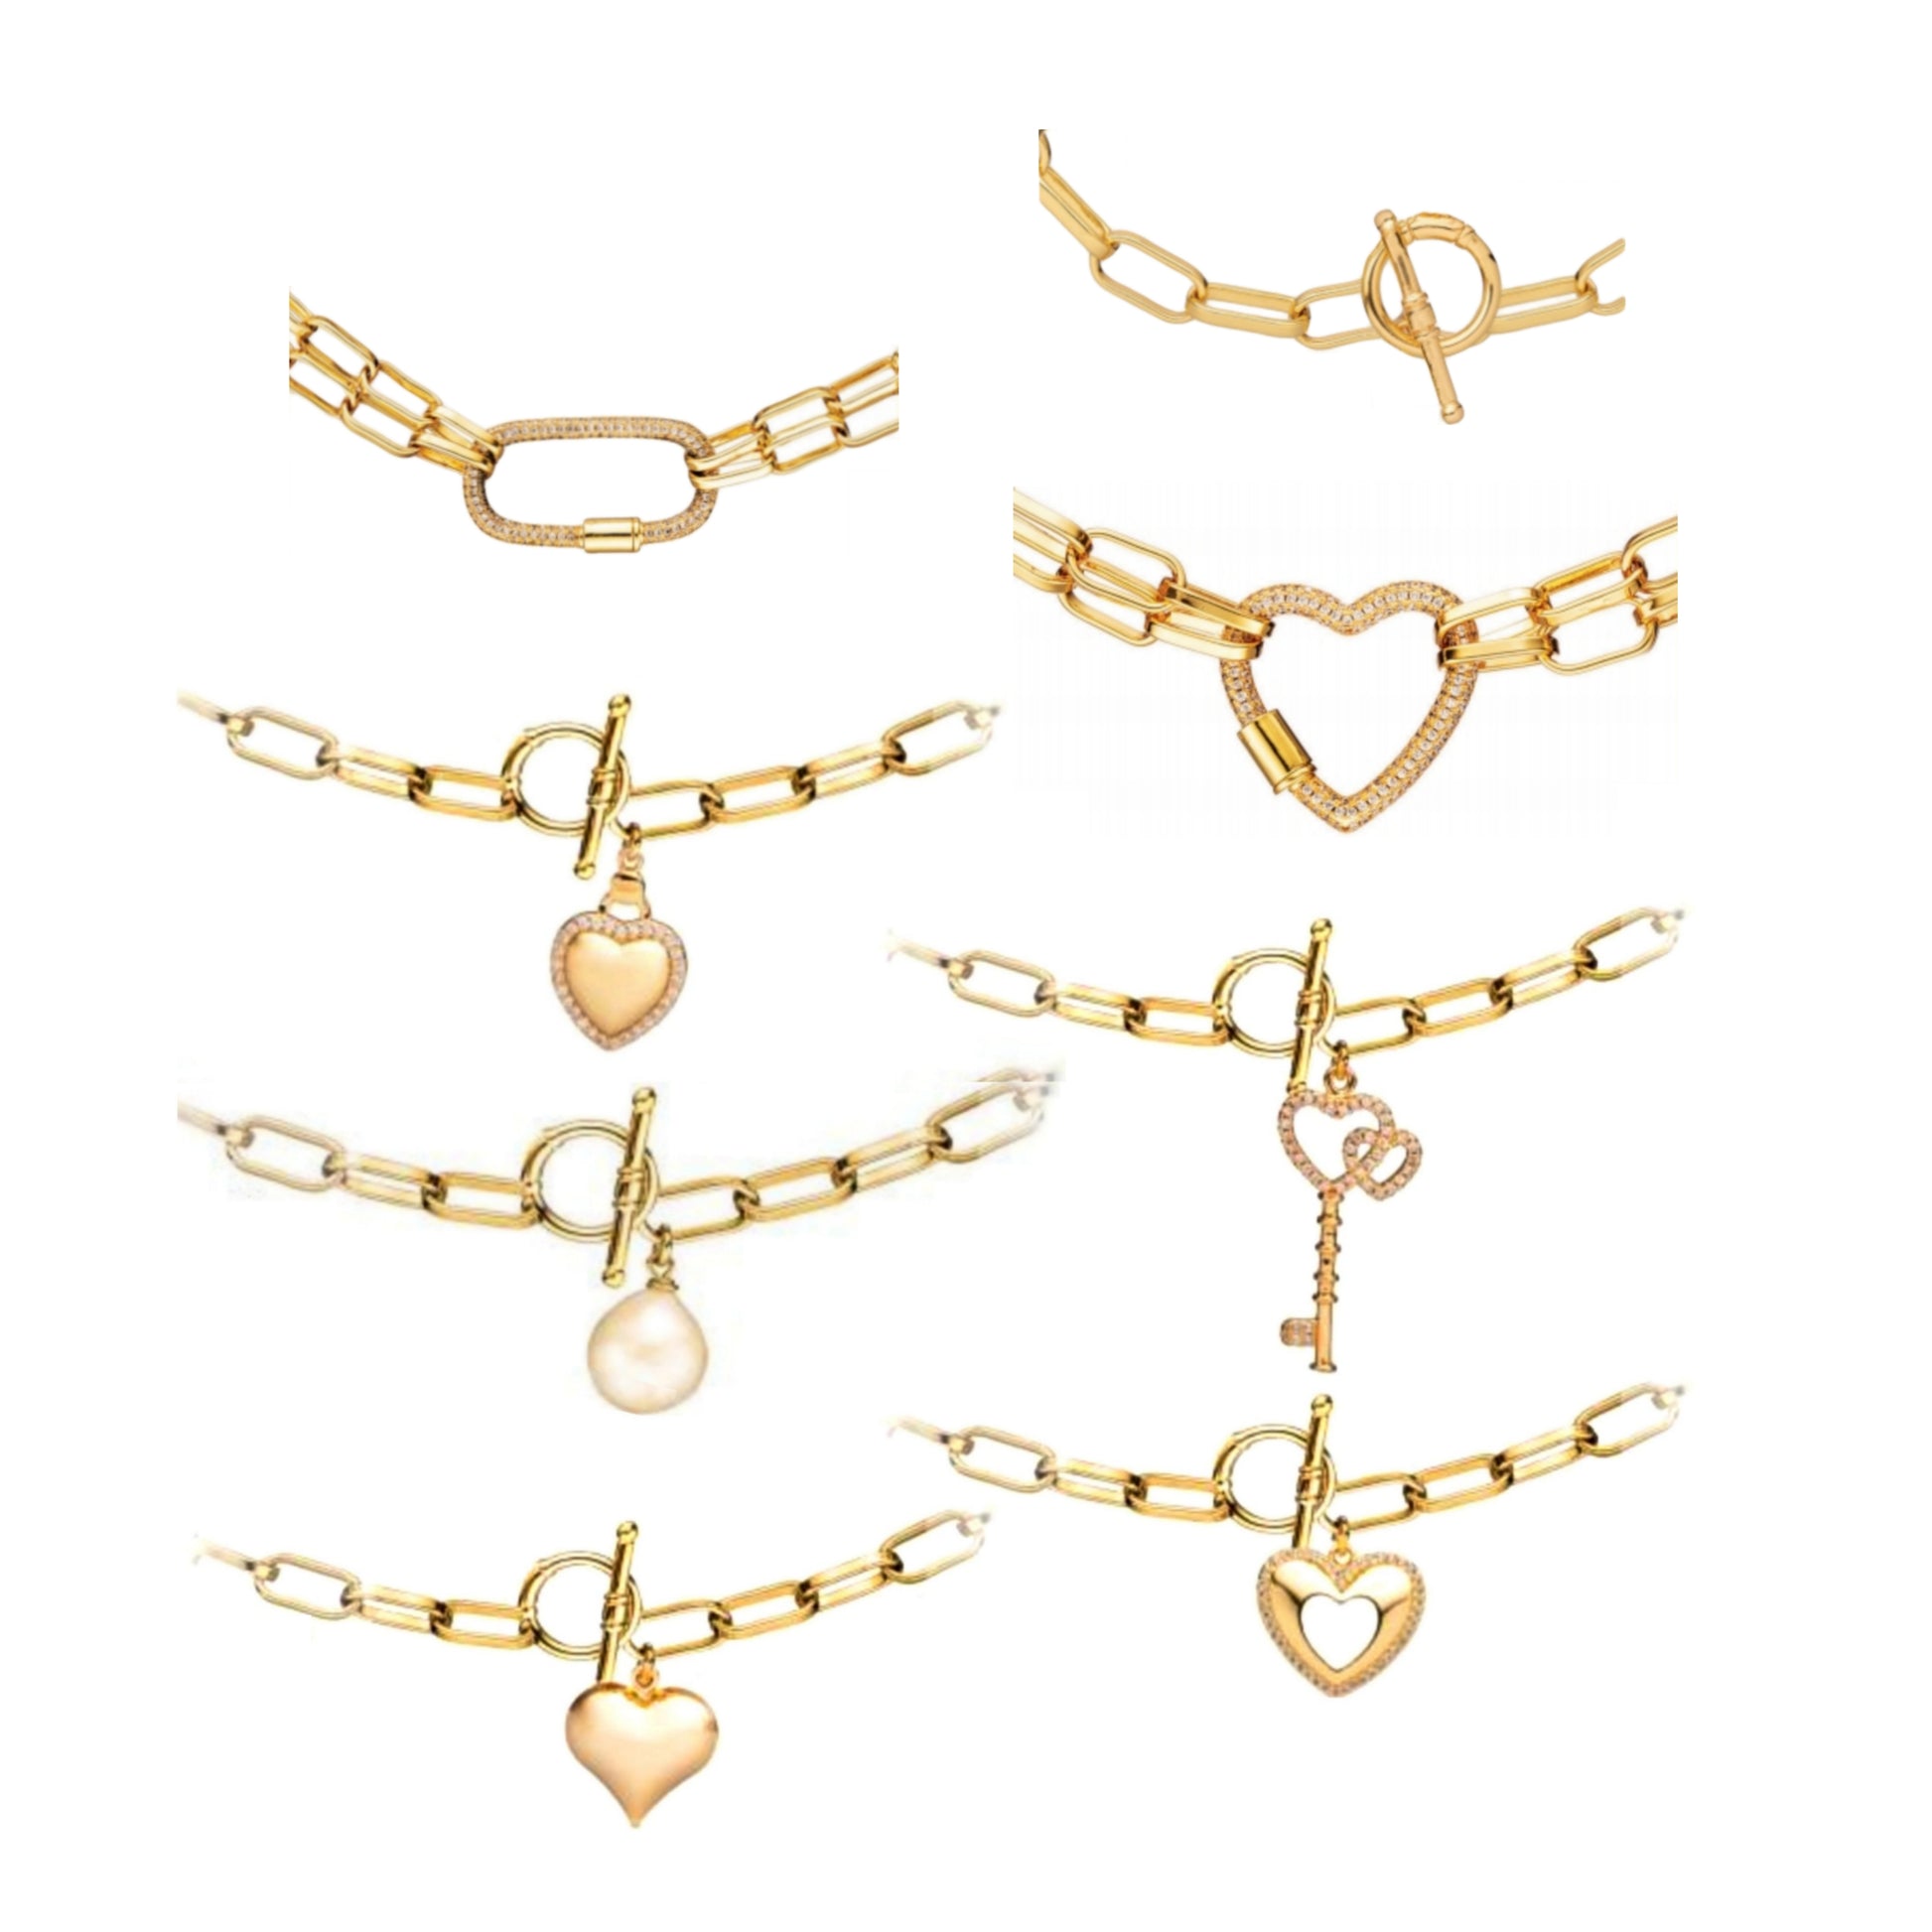 Gold Plated Long Oval Link  Bracelet - HK Jewels